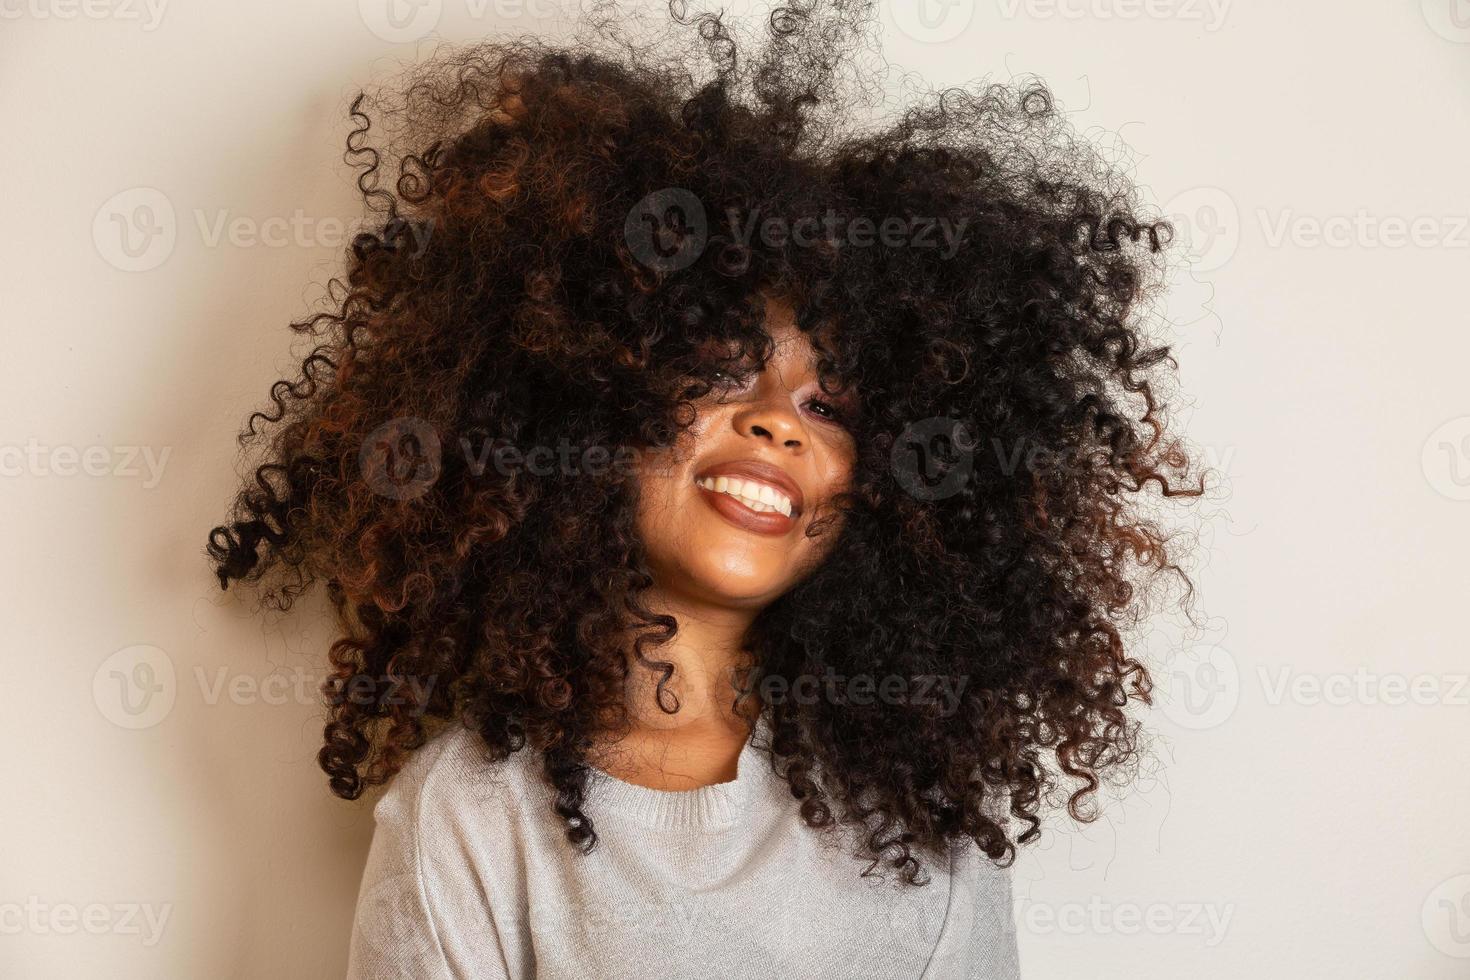 schoonheidsportret van afrikaanse amerikaanse vrouw met afrokapsel en glamourmake-up. Braziliaanse vrouw. gemengd ras. gekruld haar. kapsel. witte achtergrond. foto